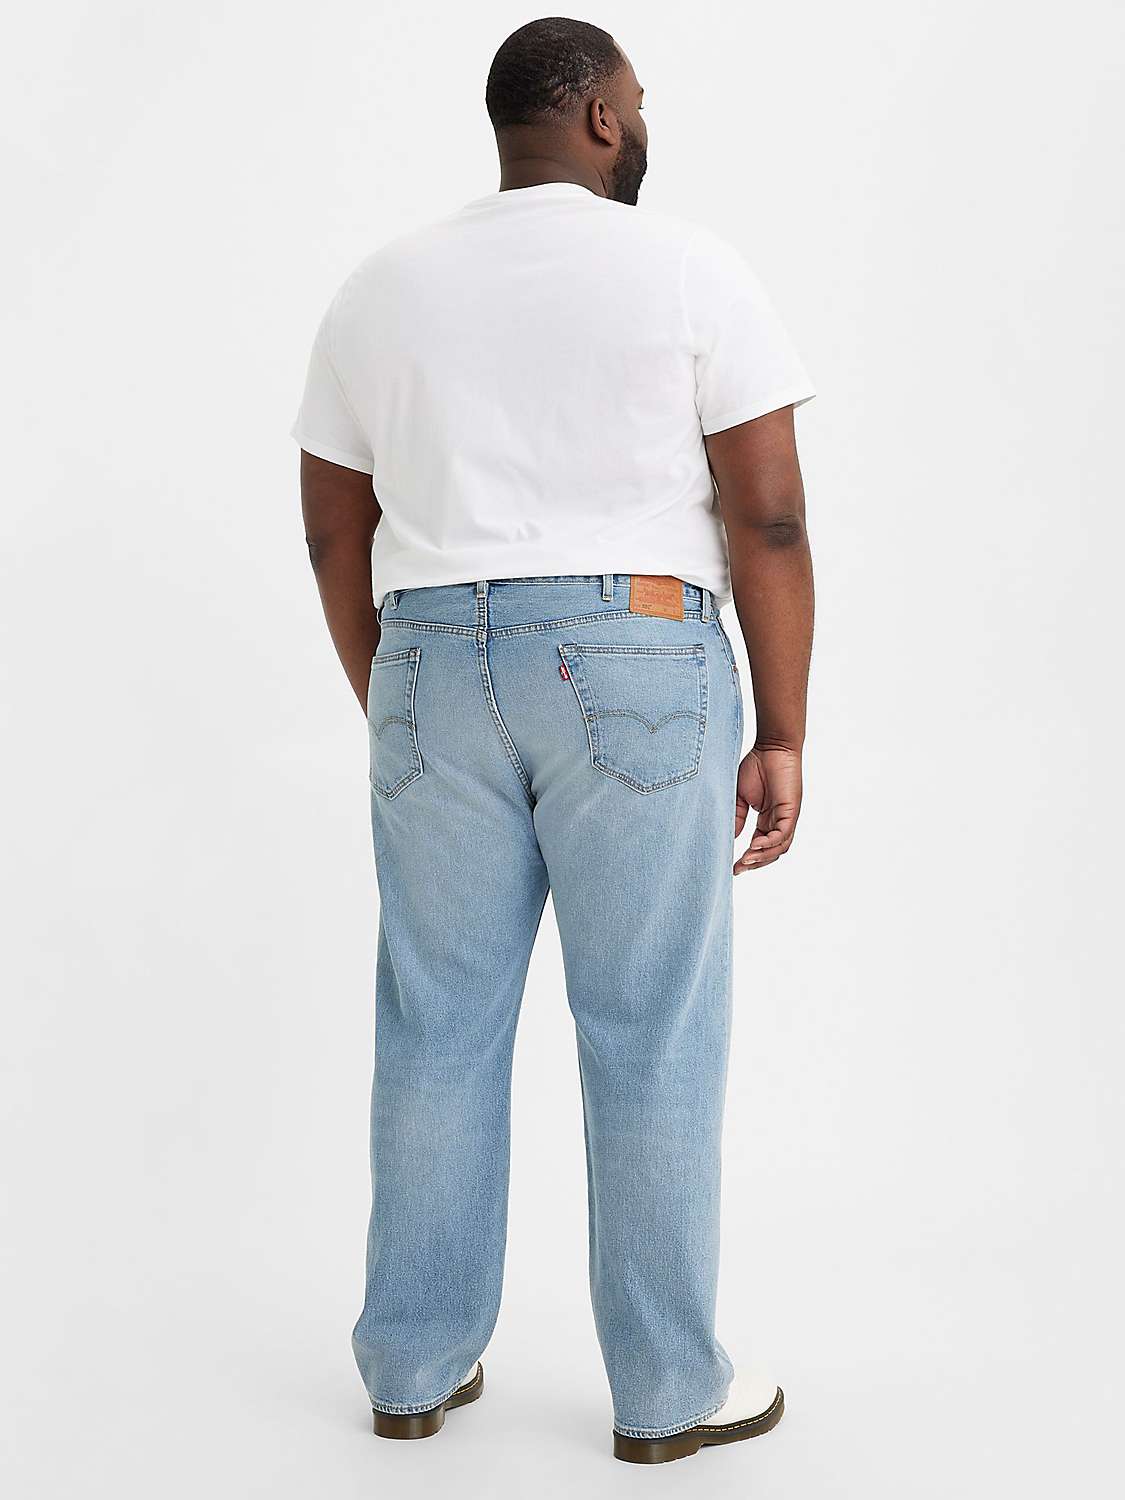 Buy Levi's Big & Tall 501 Original Straight Jeans, Denim Blue Online at johnlewis.com